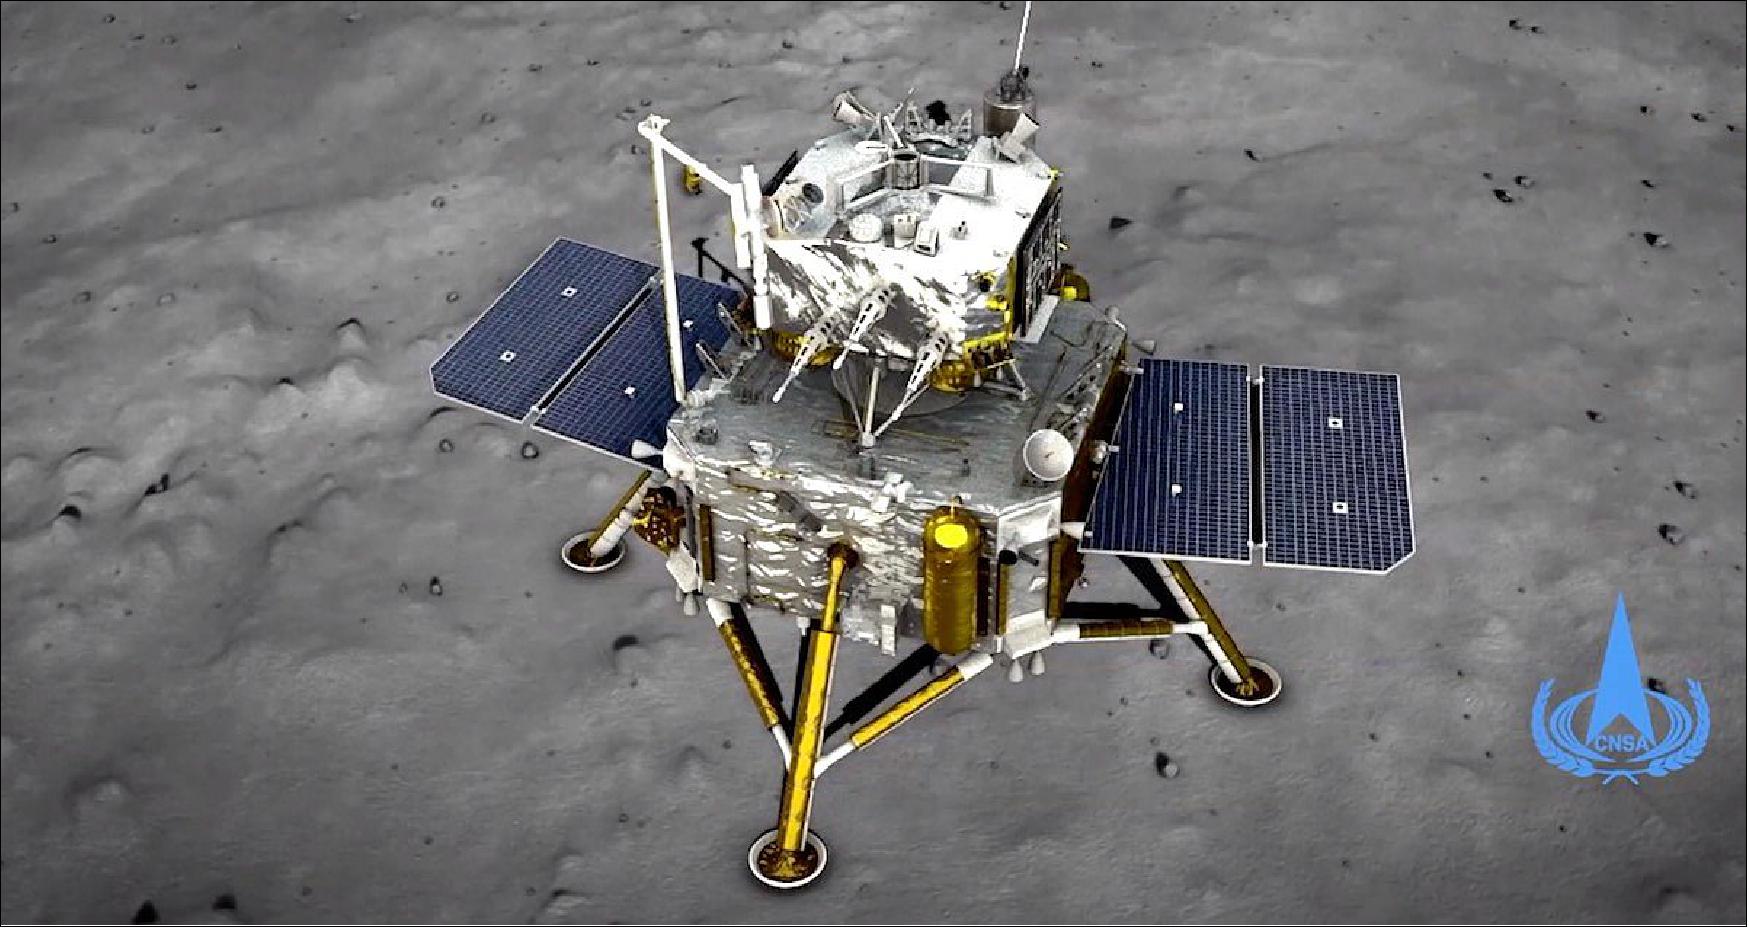 Figure 19: Illustration of the Chang’e-5 lander on the moon (image credit: CNSA)